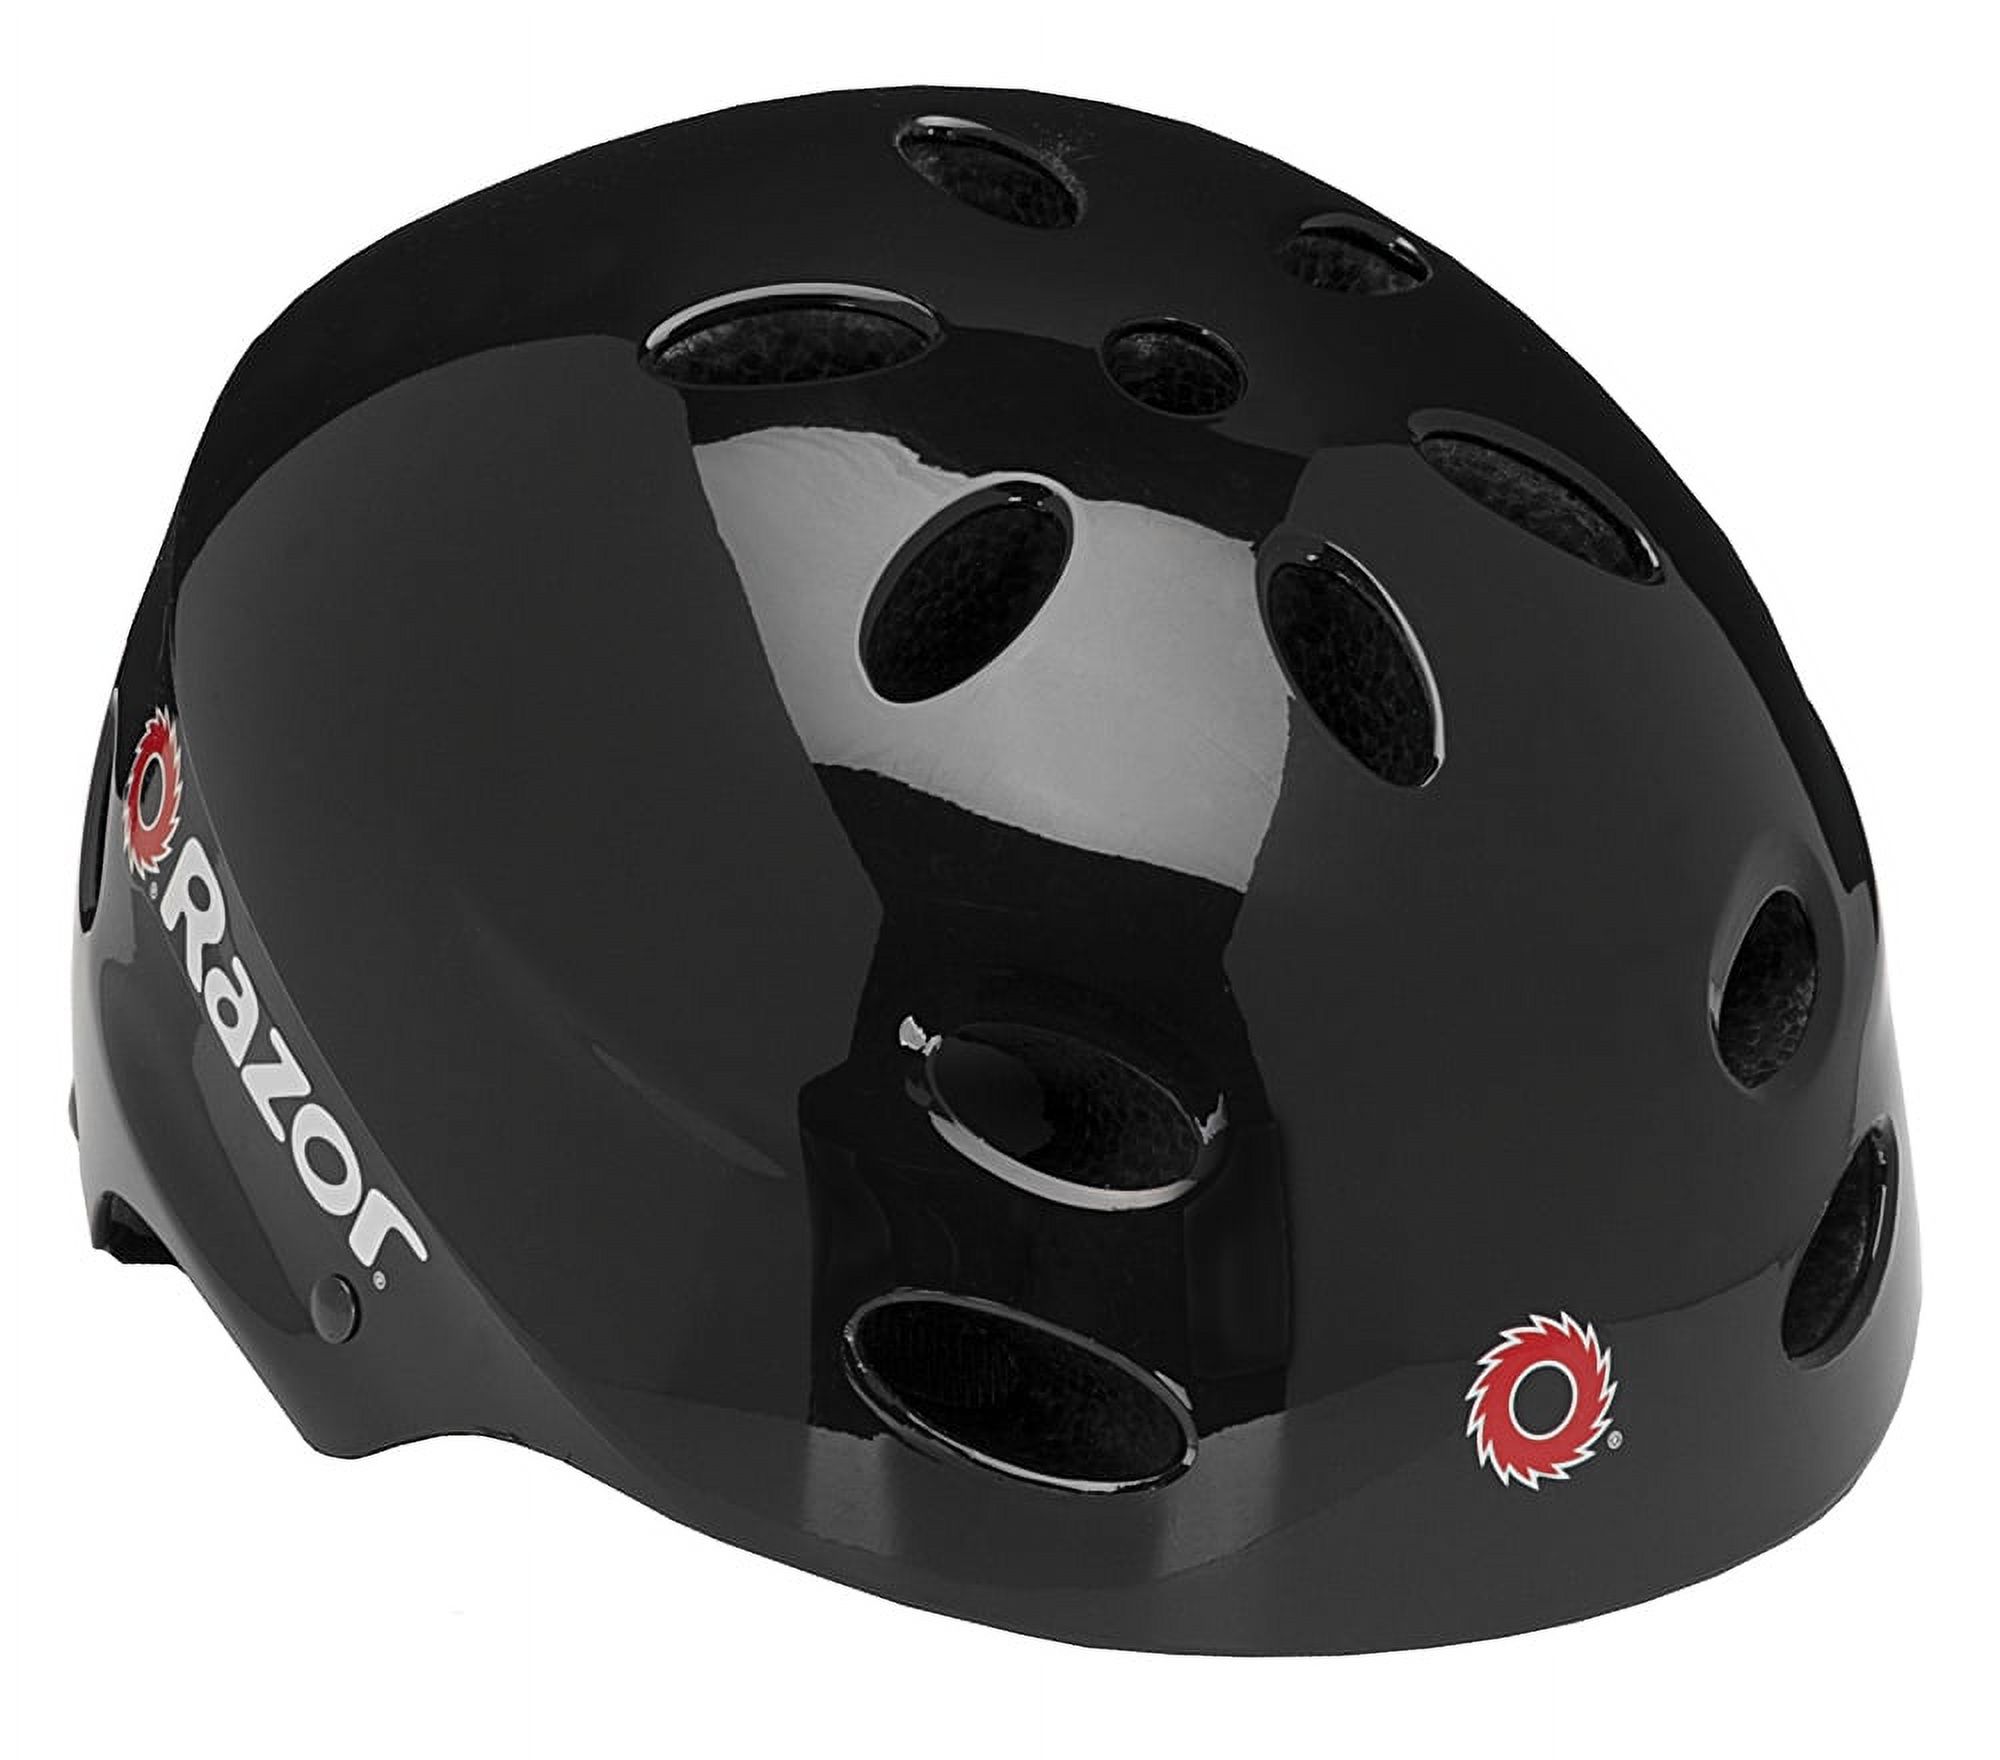 Razor V17 Multi-Sport Child's Helmet, Glossy Black - image 4 of 4